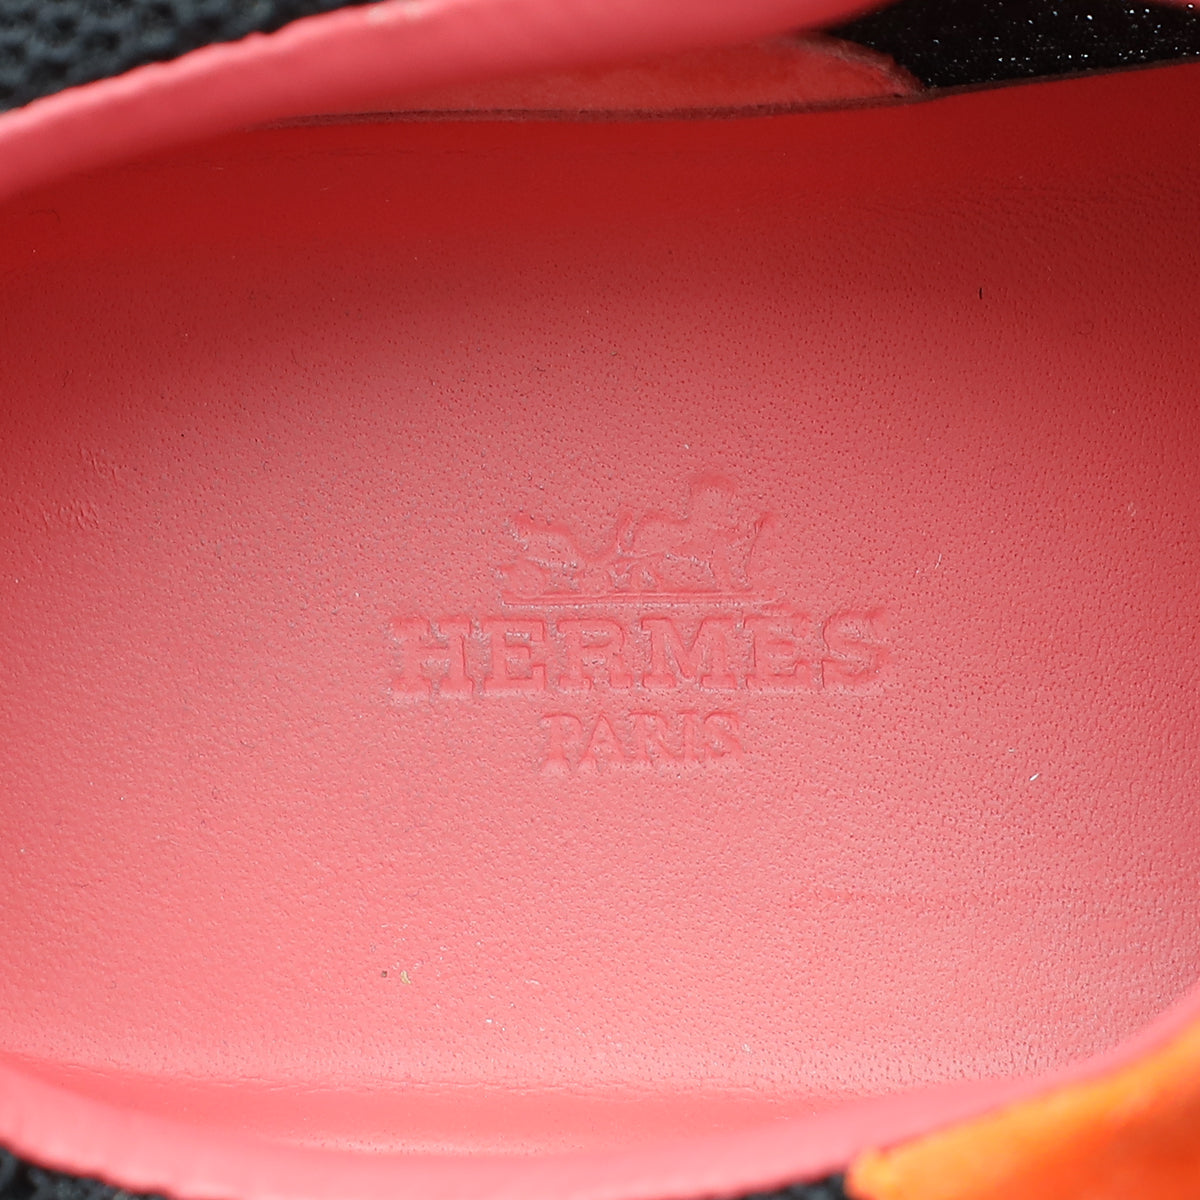 Hermes Tricolor Mesh Suede Bouncing Sneaker 38.5